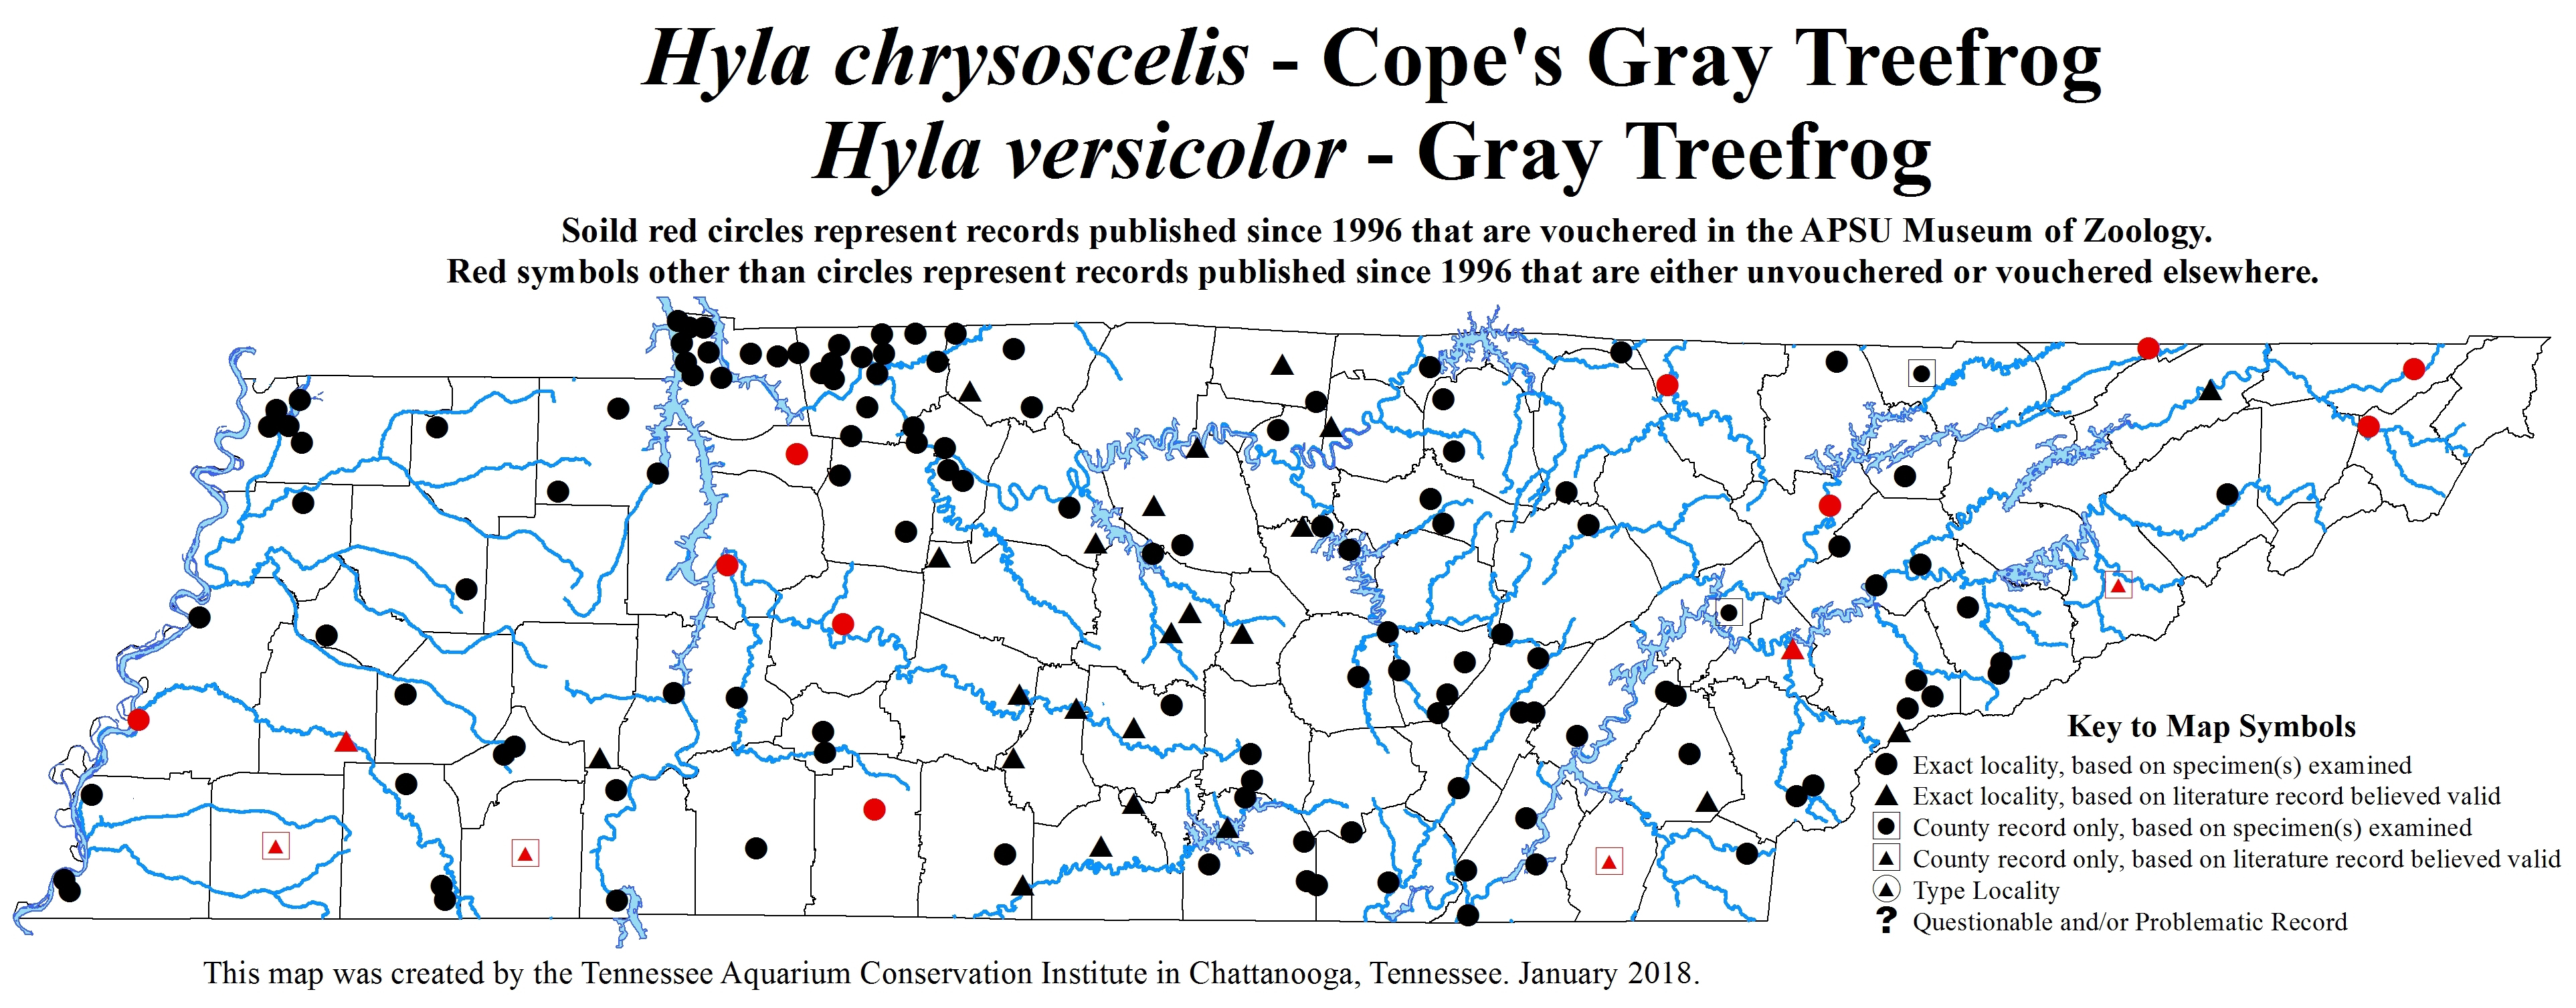 New Distribution Map - Hyla versicolor/chrysoscelis - Gray Treefrogs